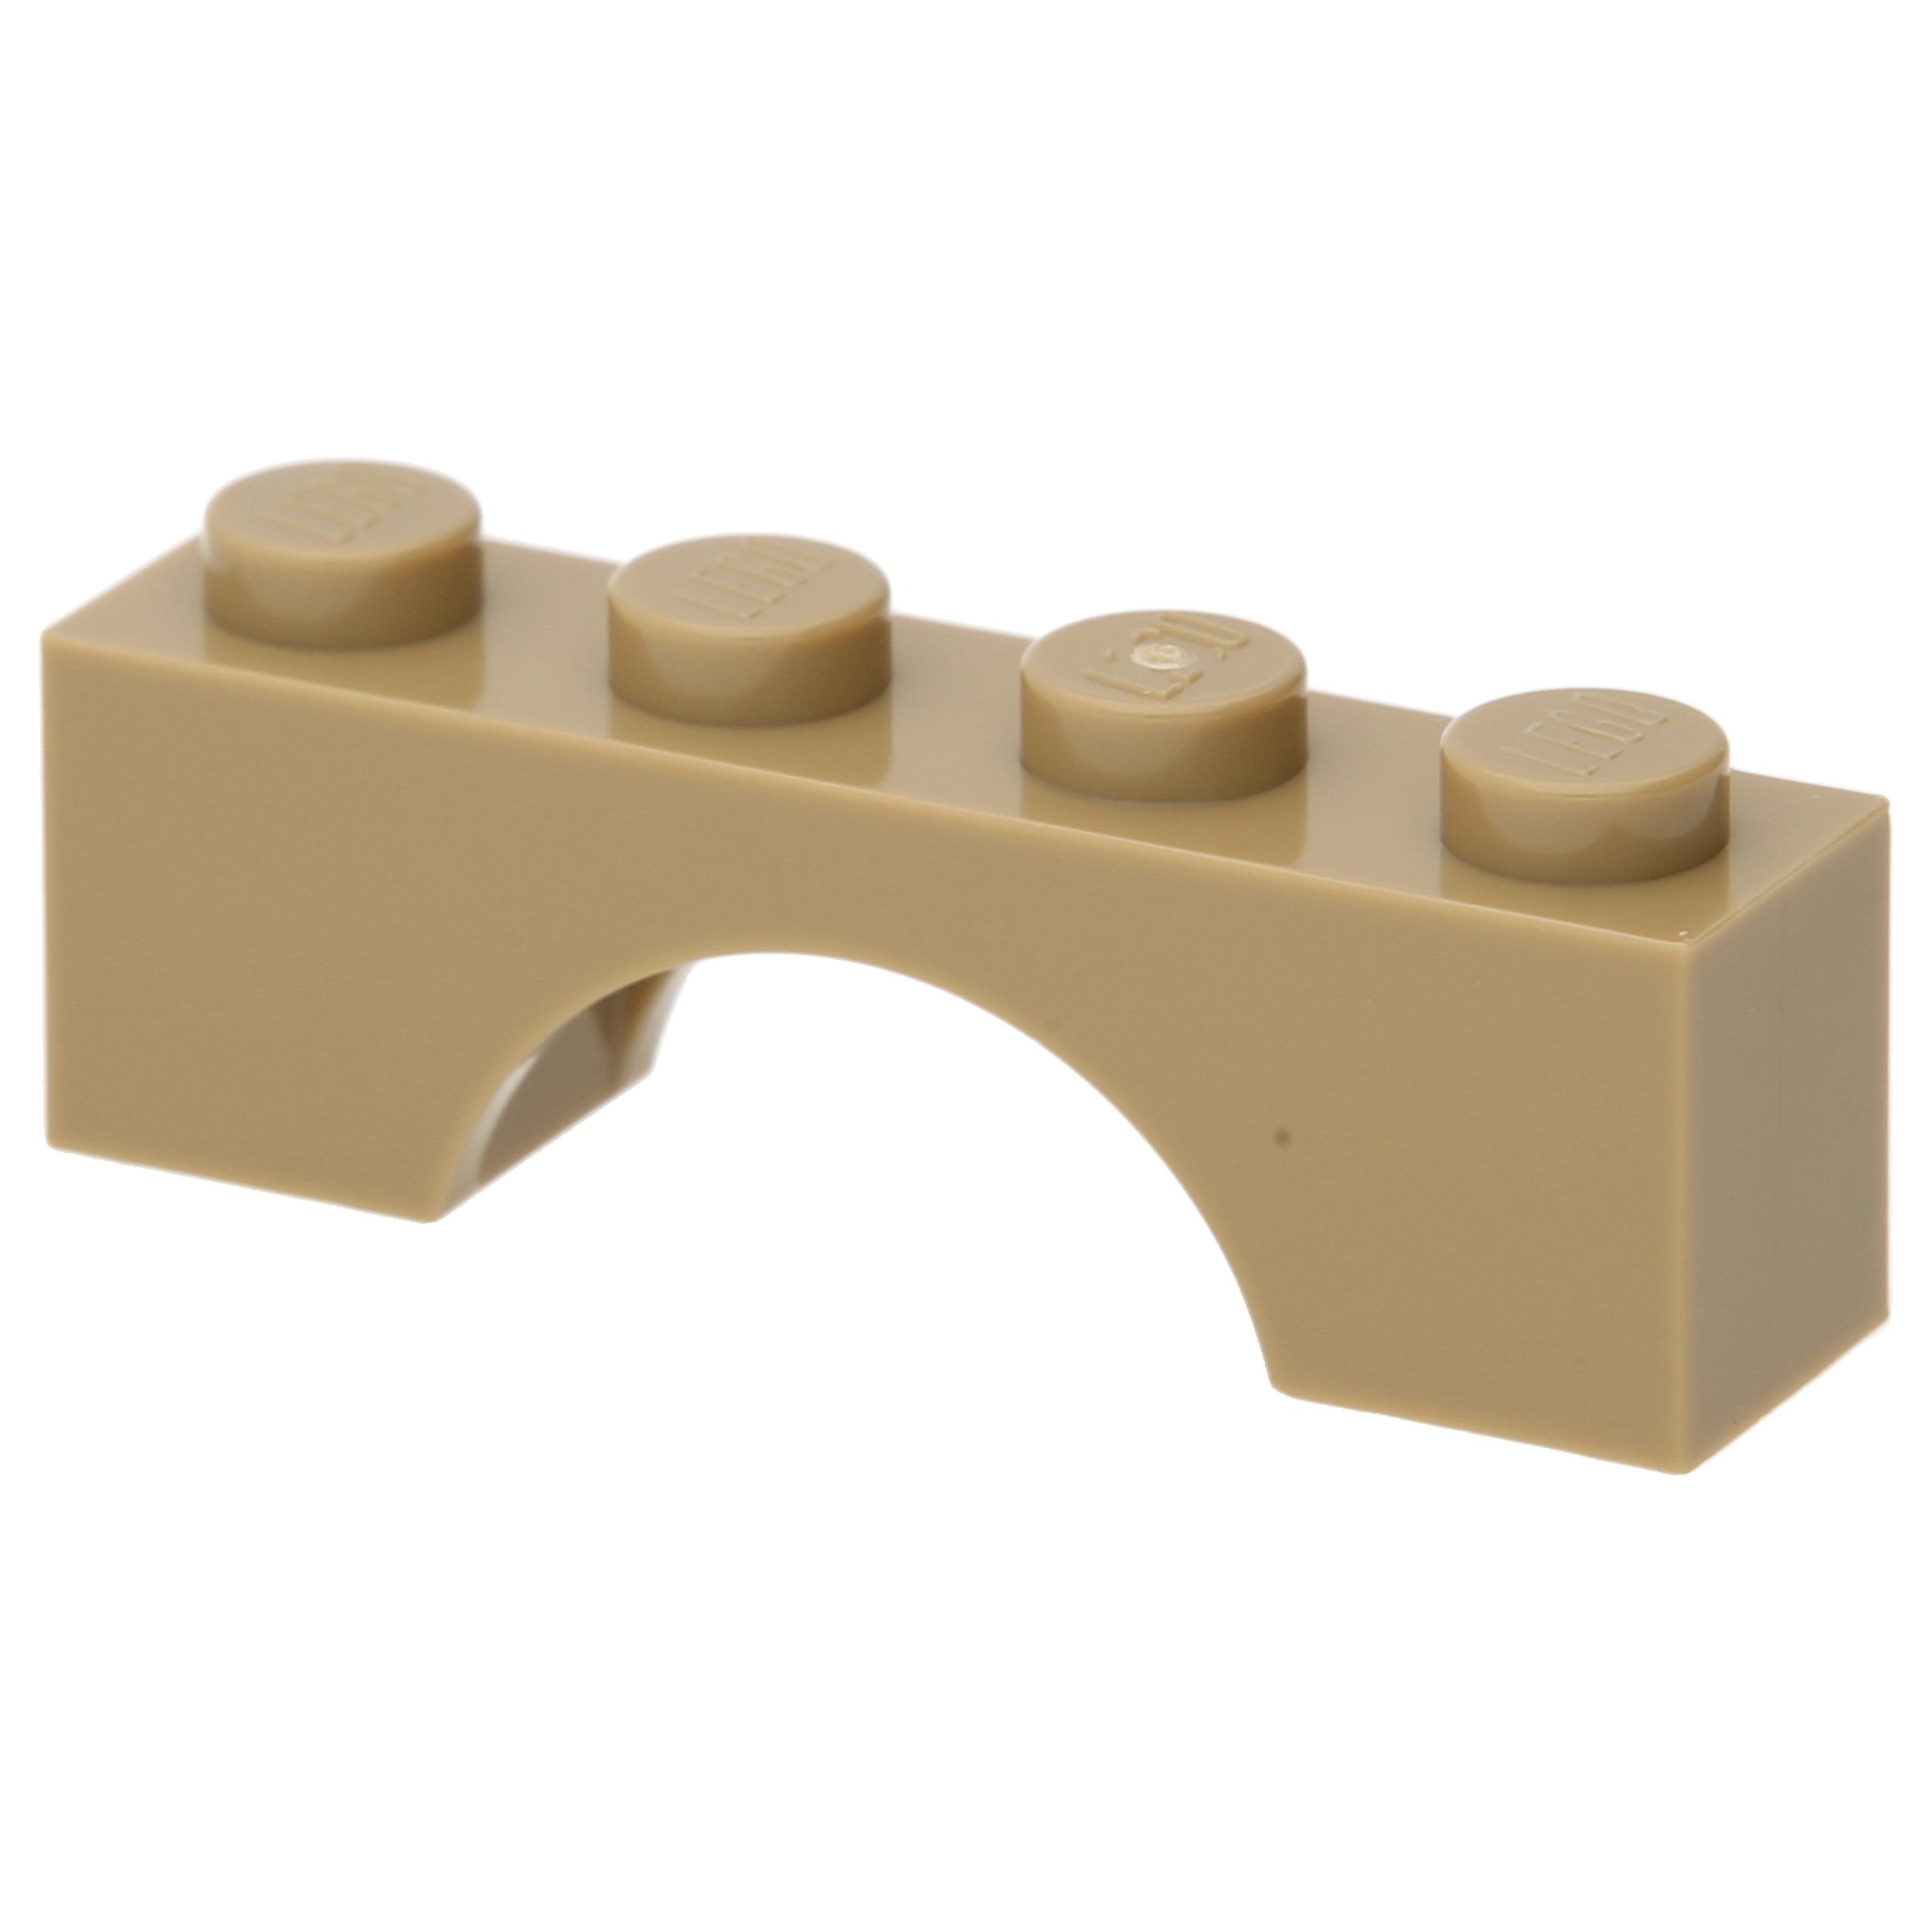 LEGO arch stones - 1 x 4